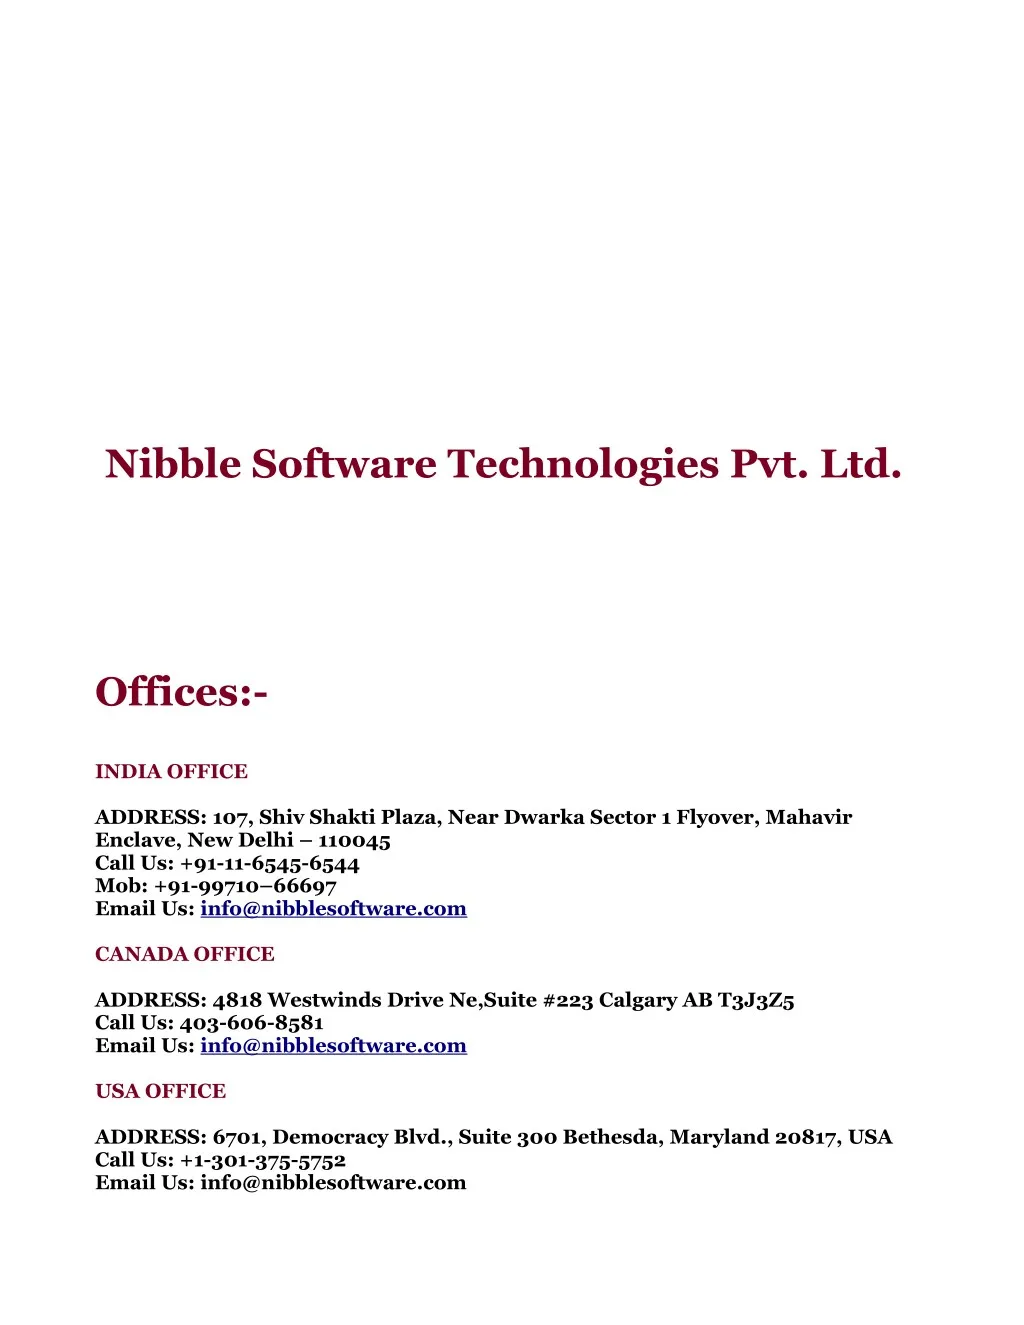 nibble software technologies pvt ltd